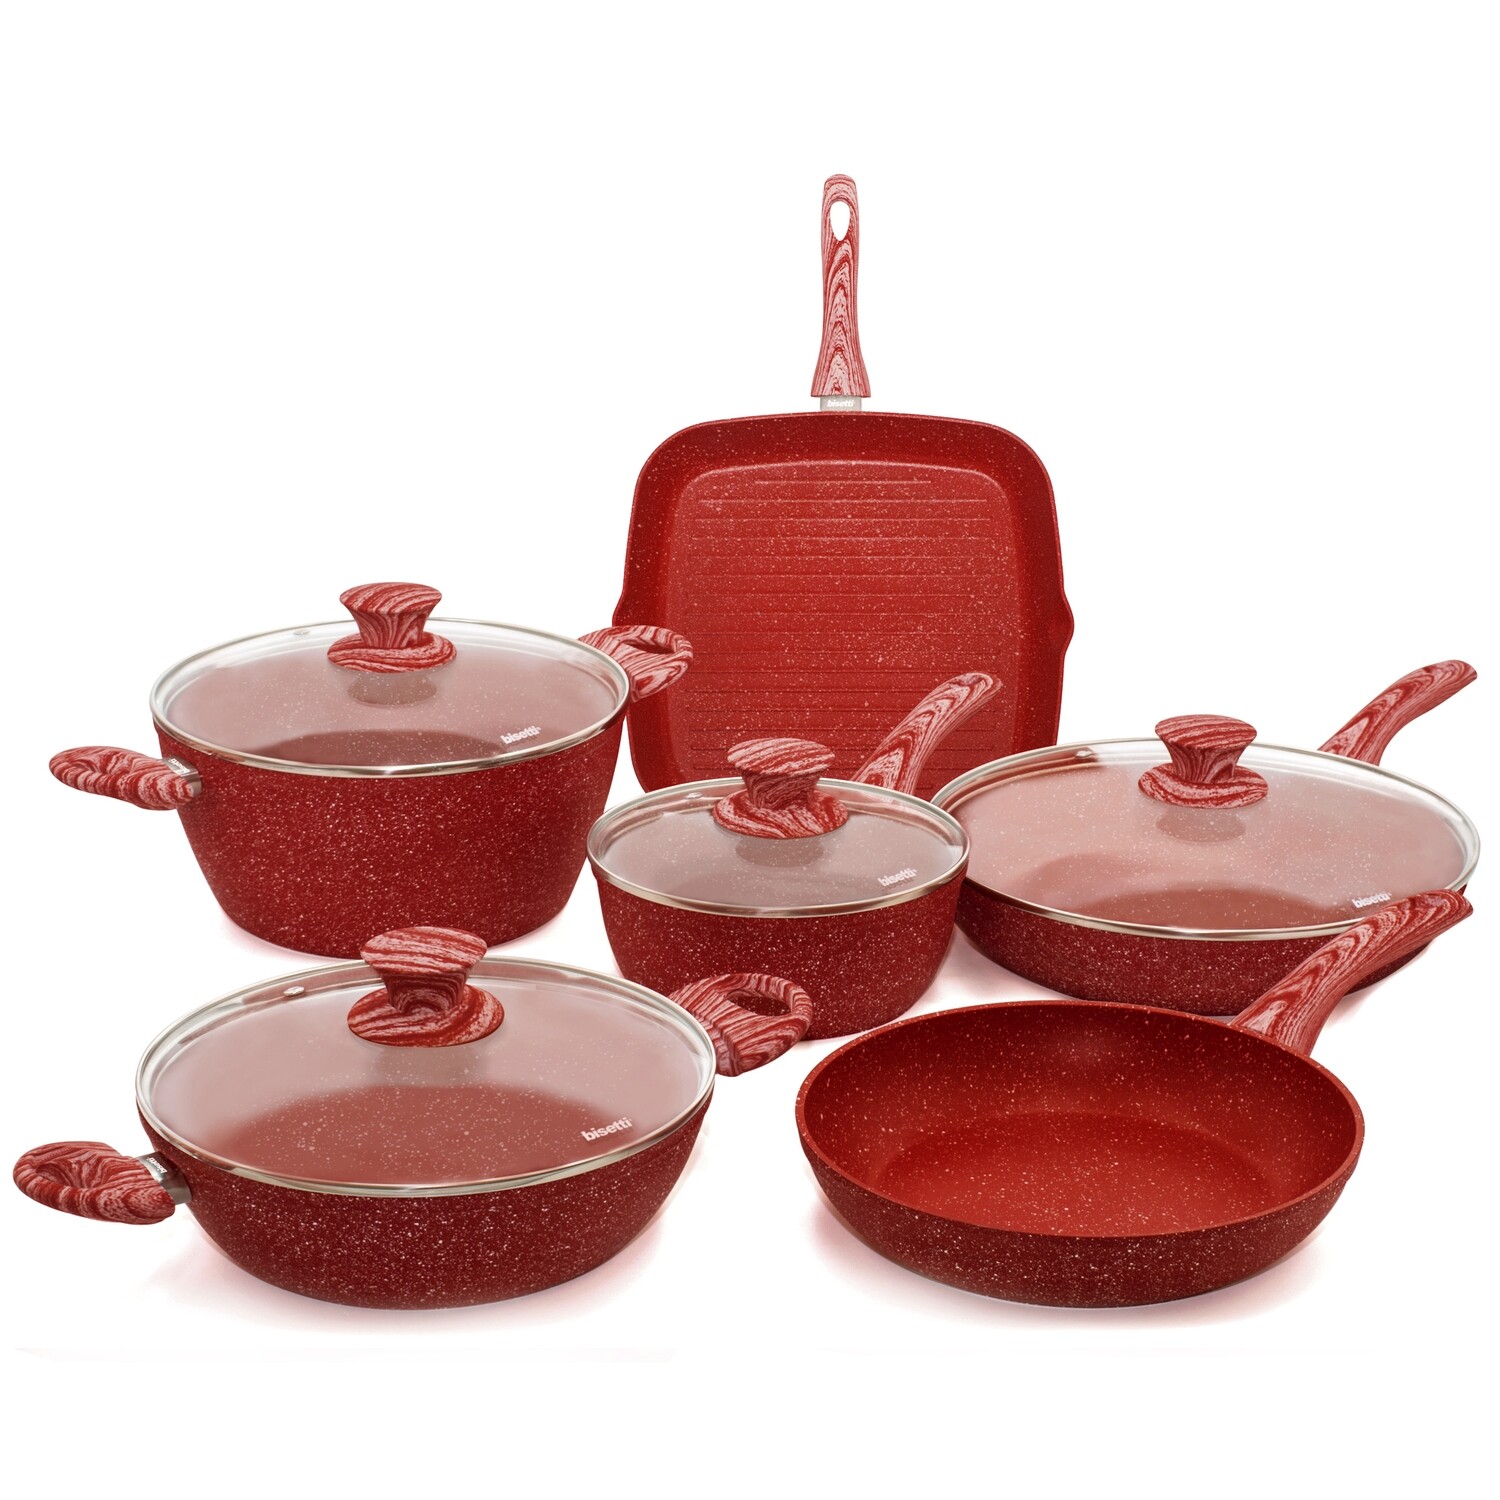 10 pieces cookware set 'Red Passion'  wood colour handles